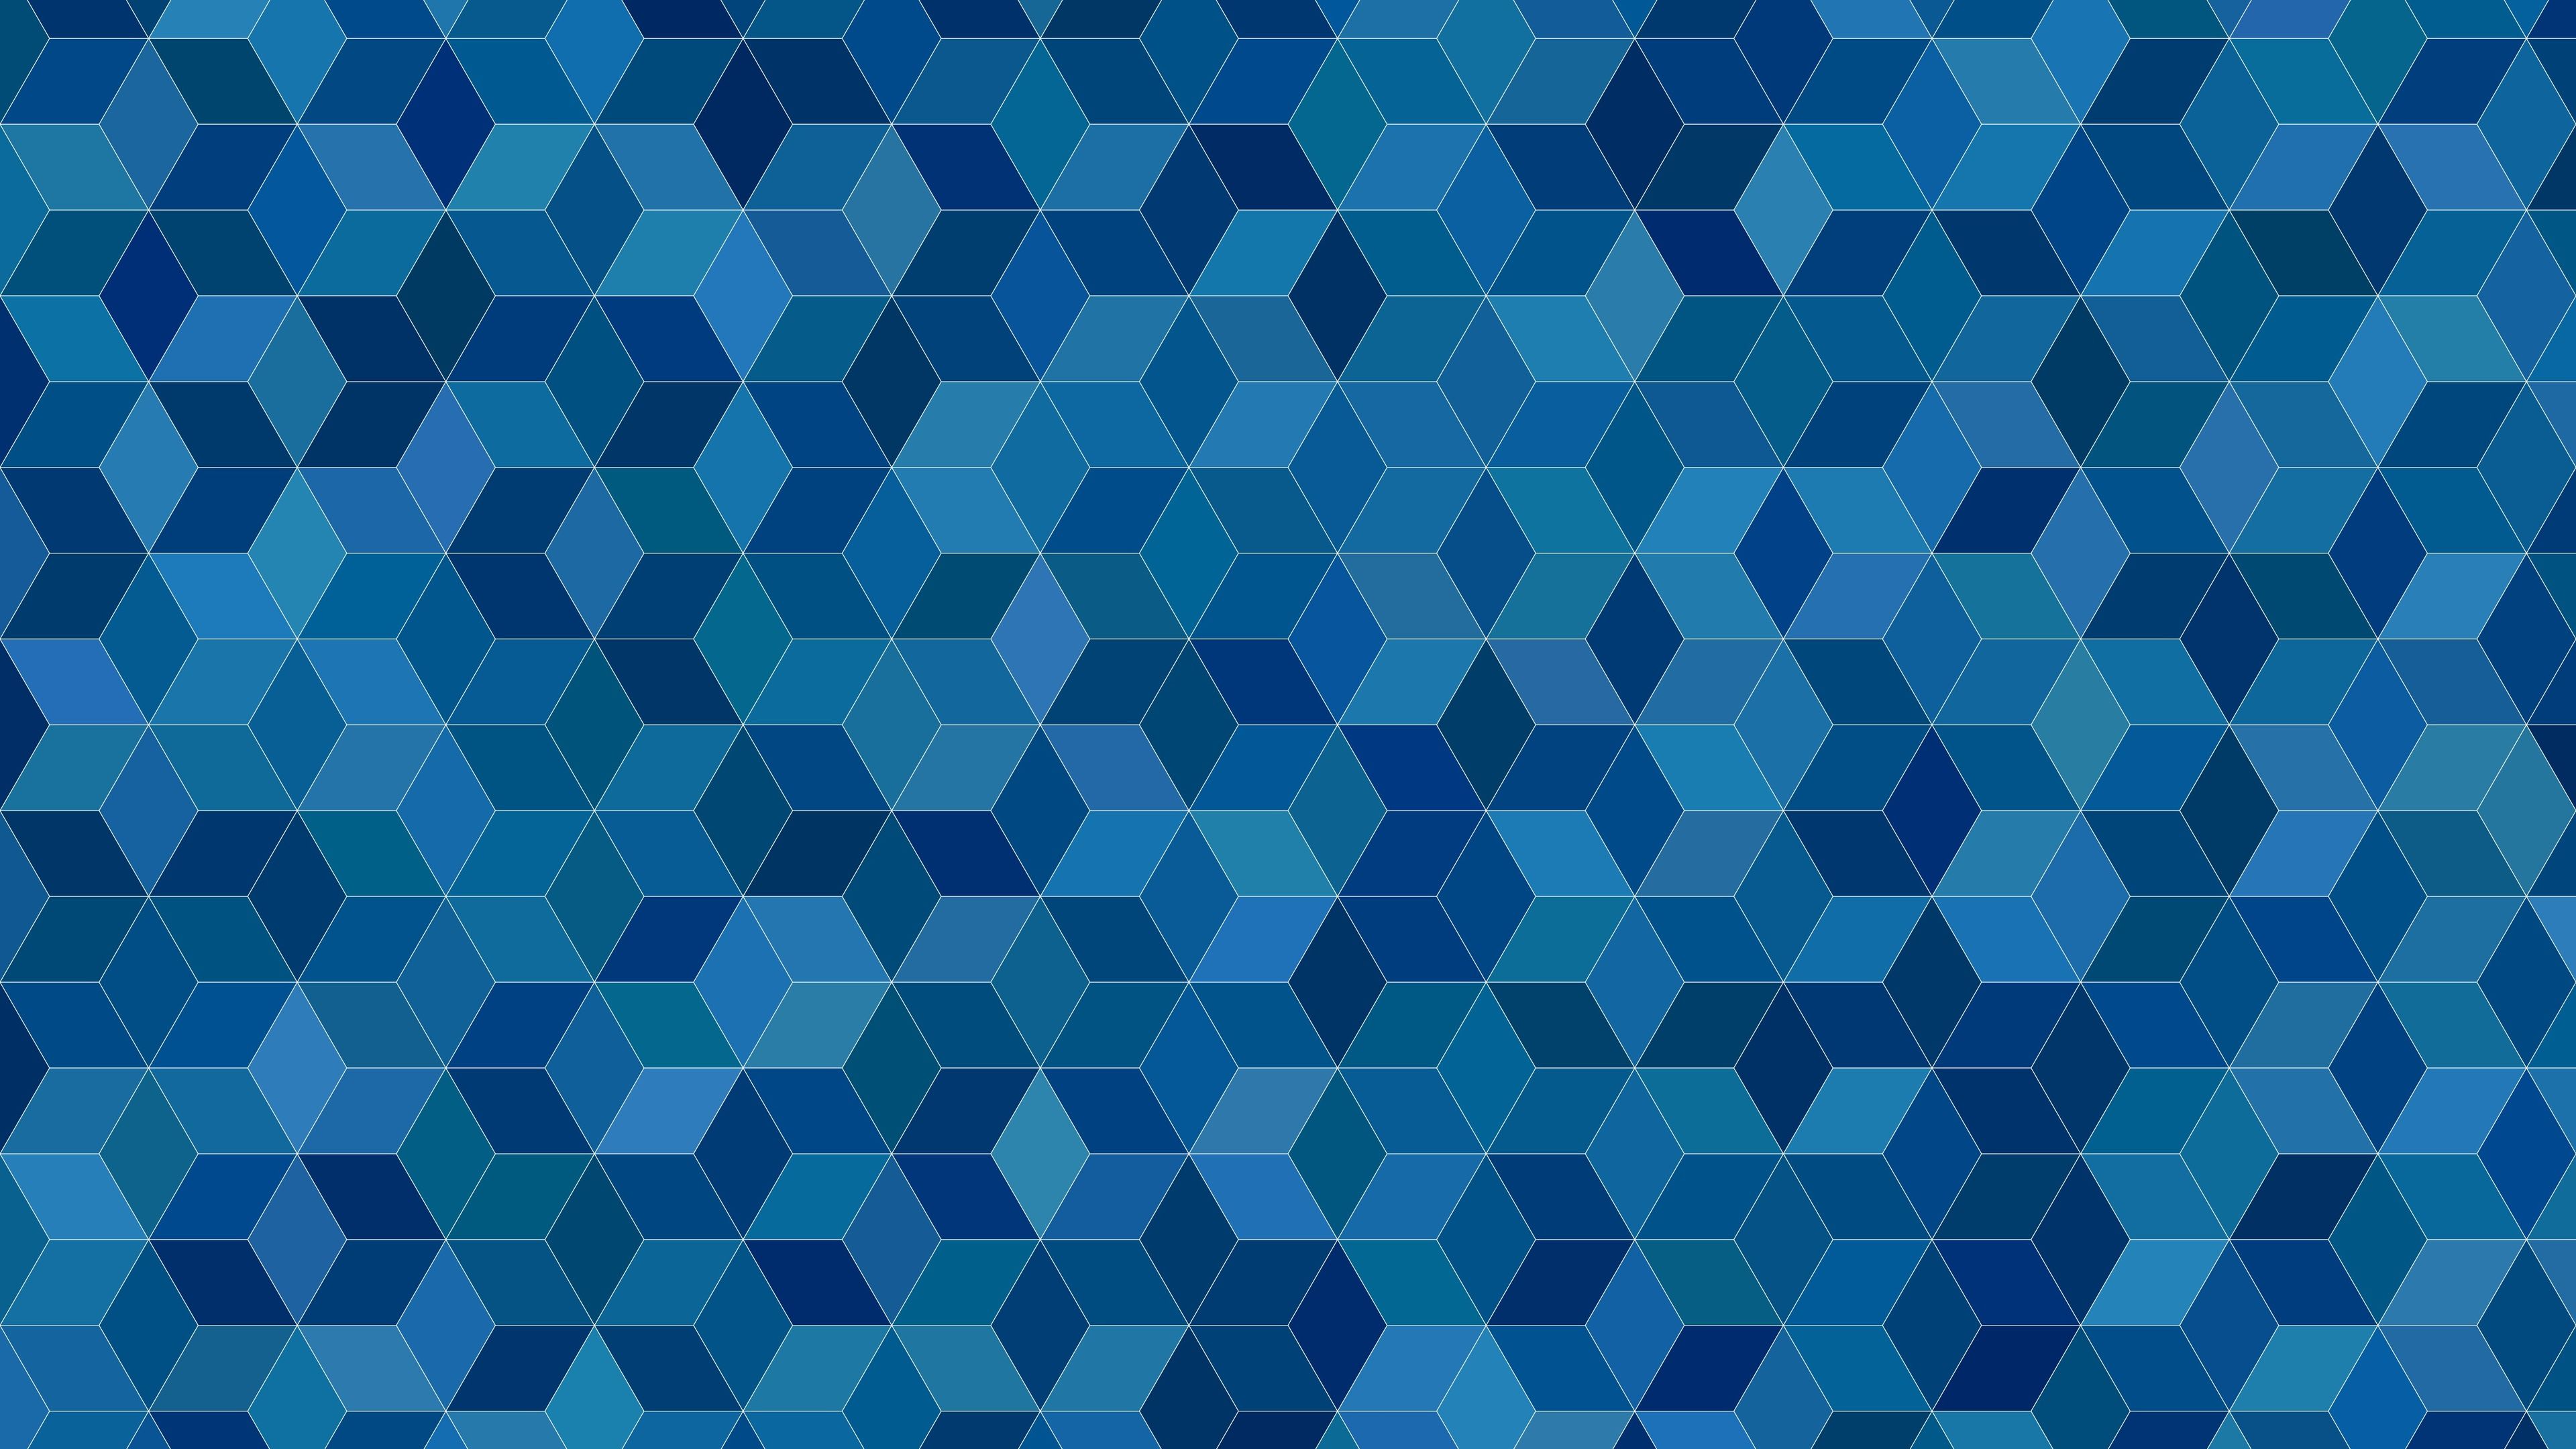 Wallpaper 4k Polygons Abstract Patterns 5k 4k Wallpaper, 5k Wallpaper, Abstract Wallpaper, Hd Wallpaper, Pattern Wallpaper, Polygon Wallpaper